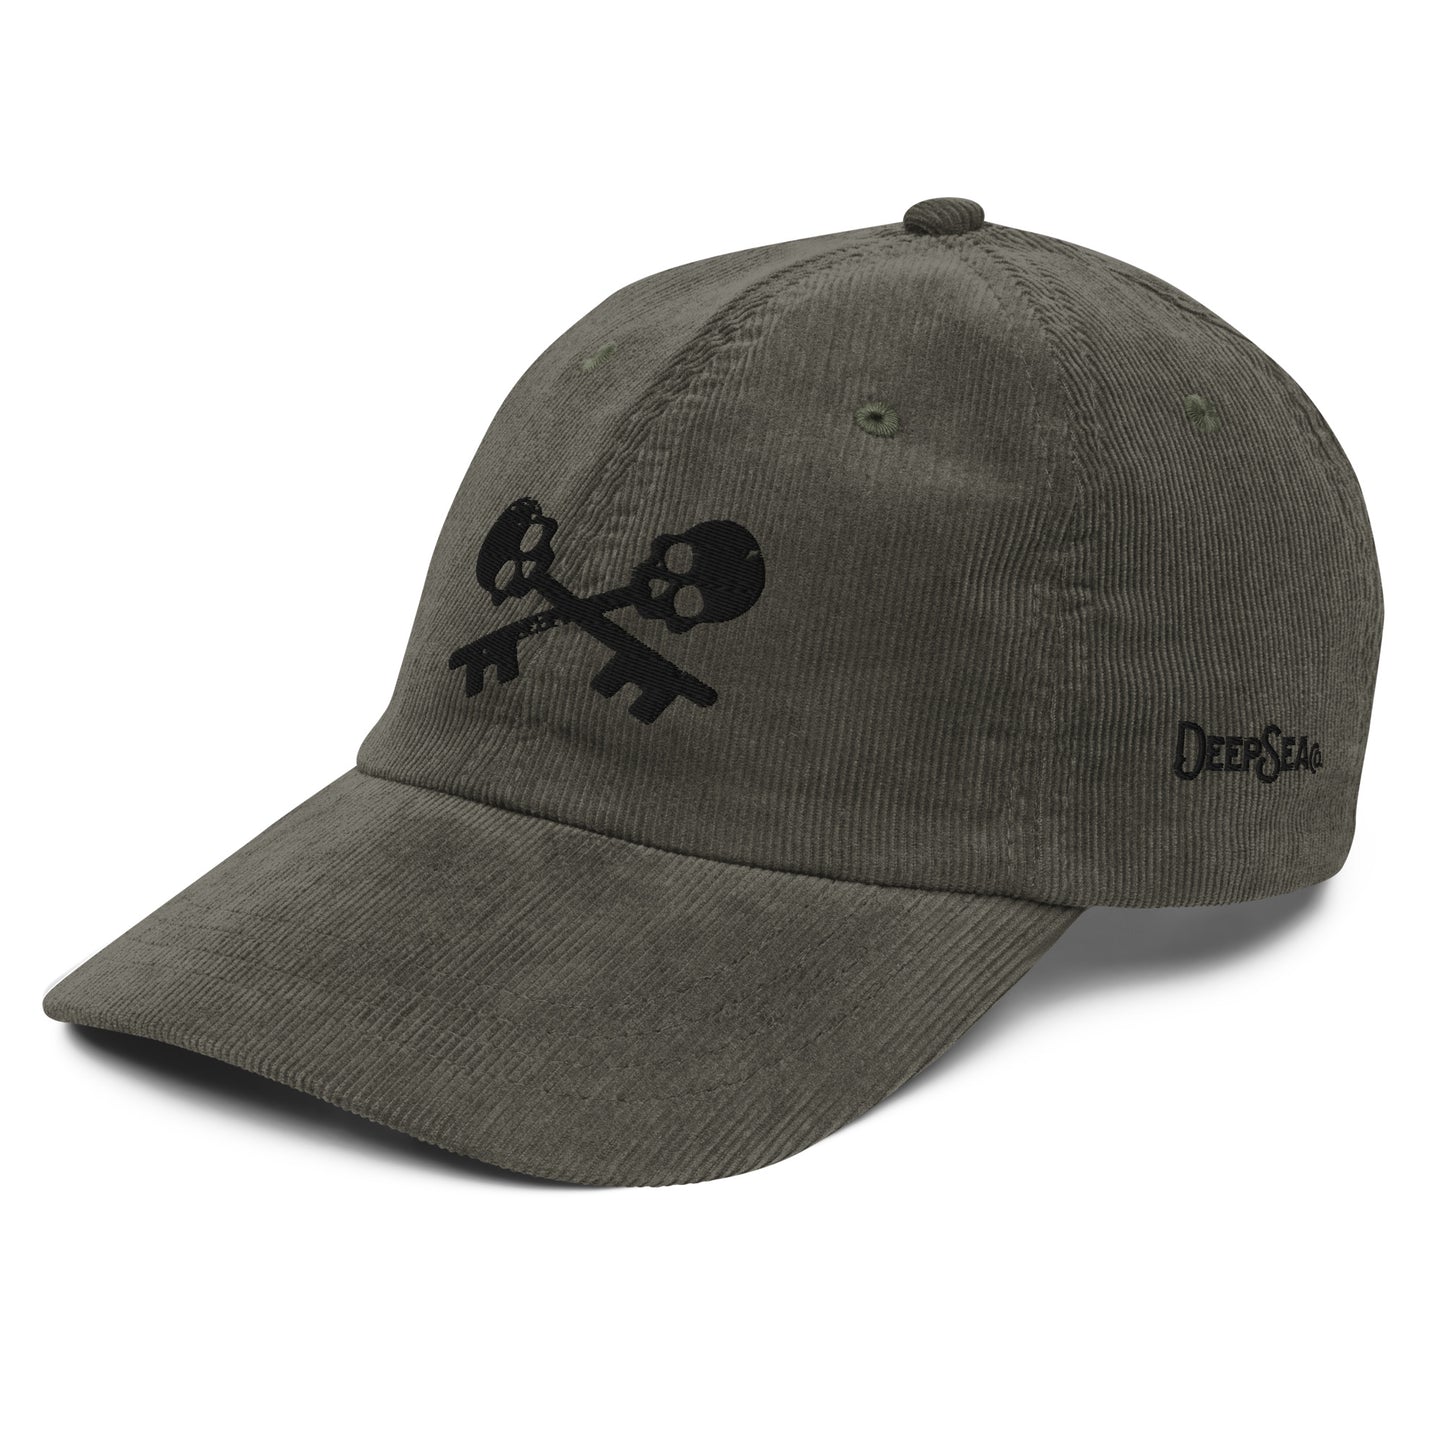 DeepSea Co. Vintage corduroy cap